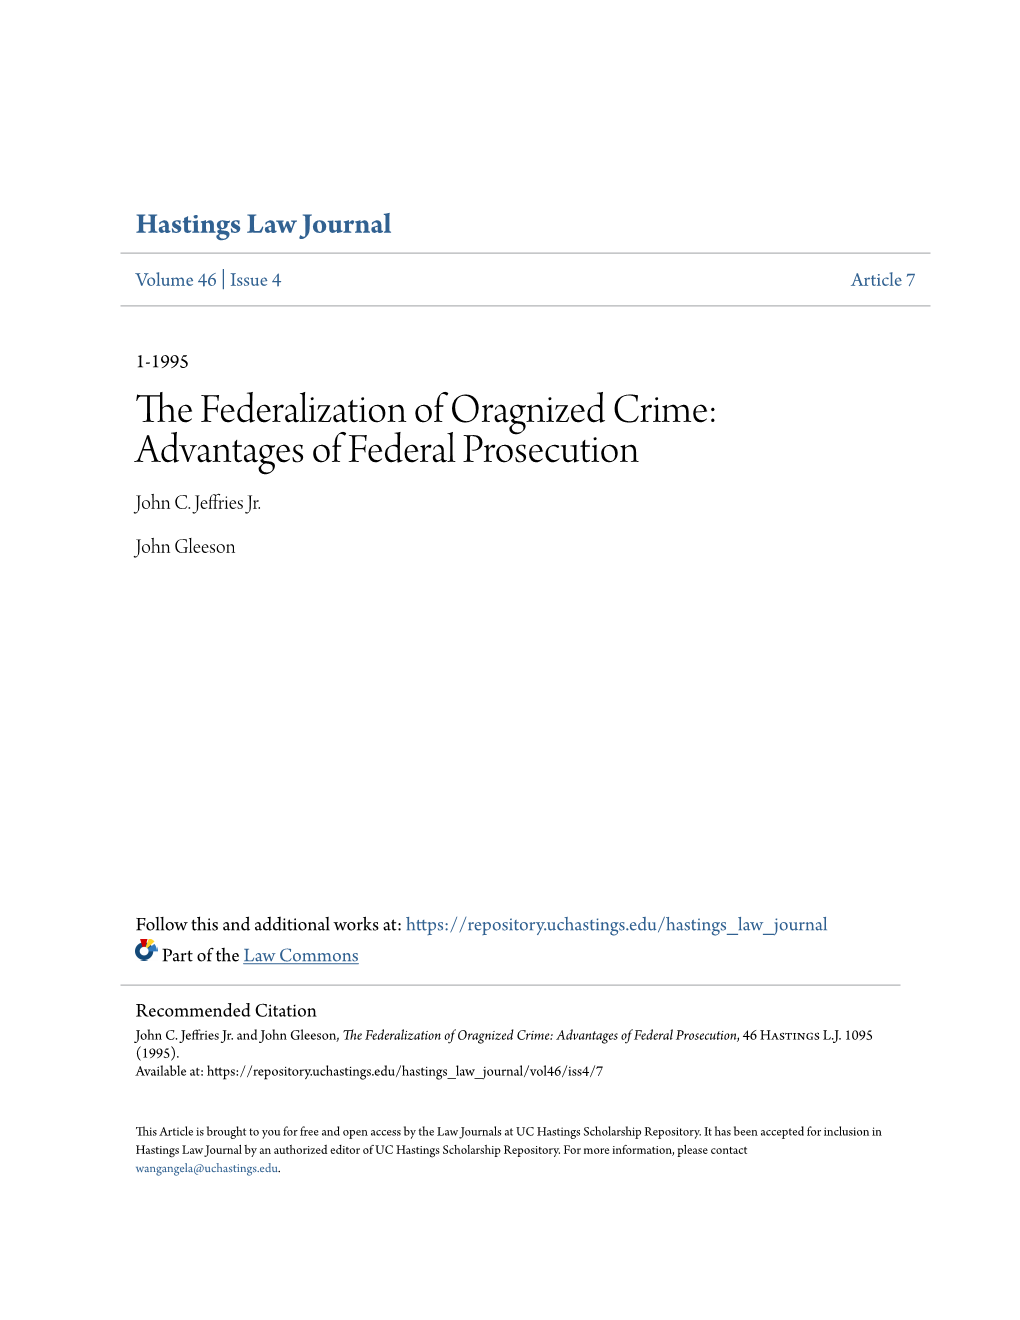 Advantages of Federal Prosecution John C